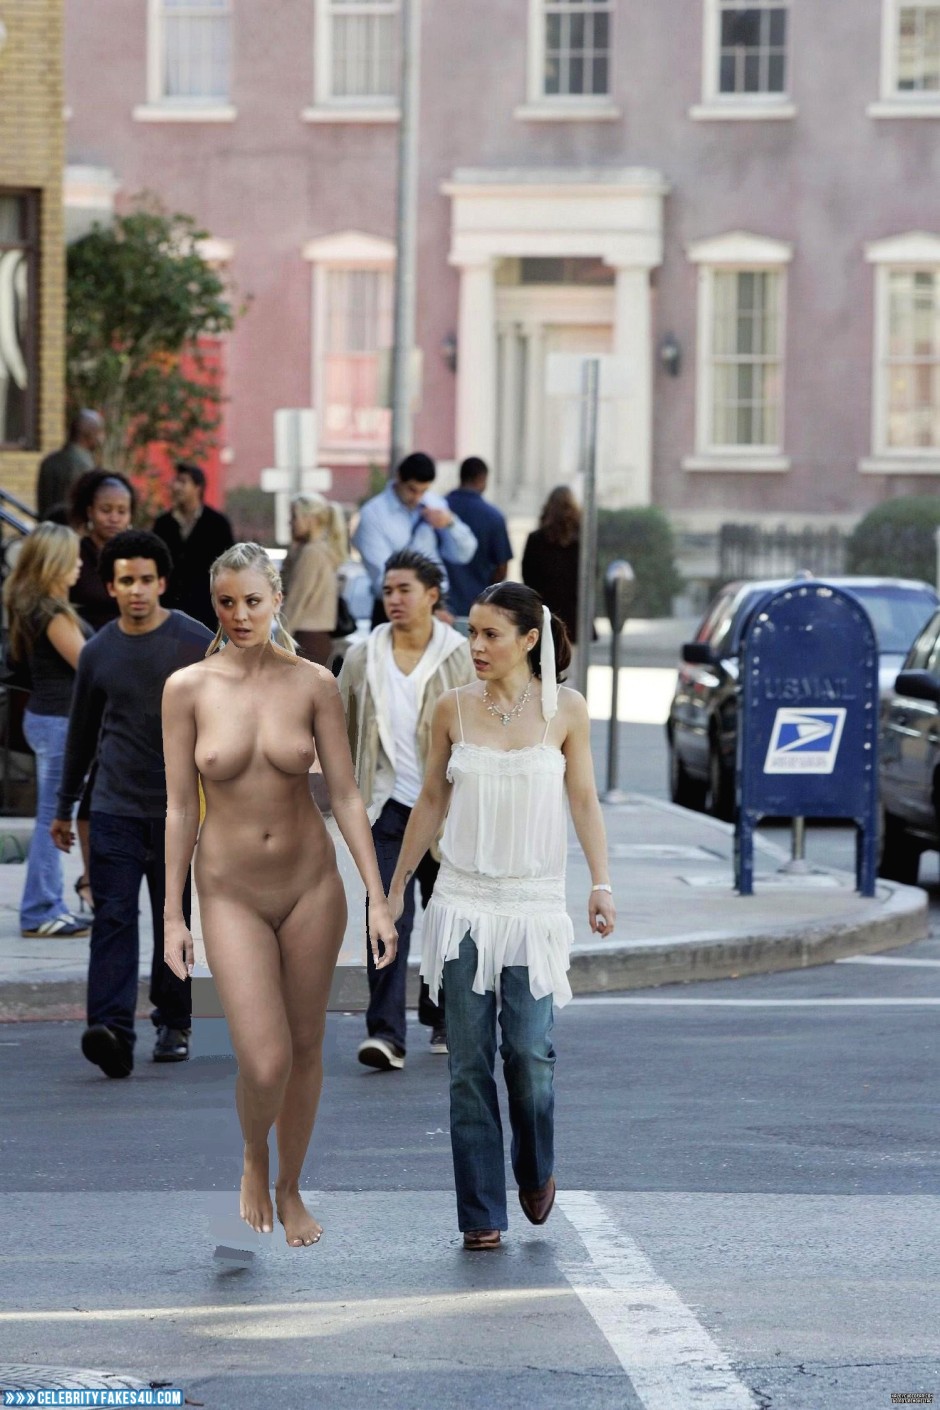 Lesbians Public Nude - Kaley Cuoco Lesbian Public Nudes Fake 001 Â« Celebrity Fakes 4U